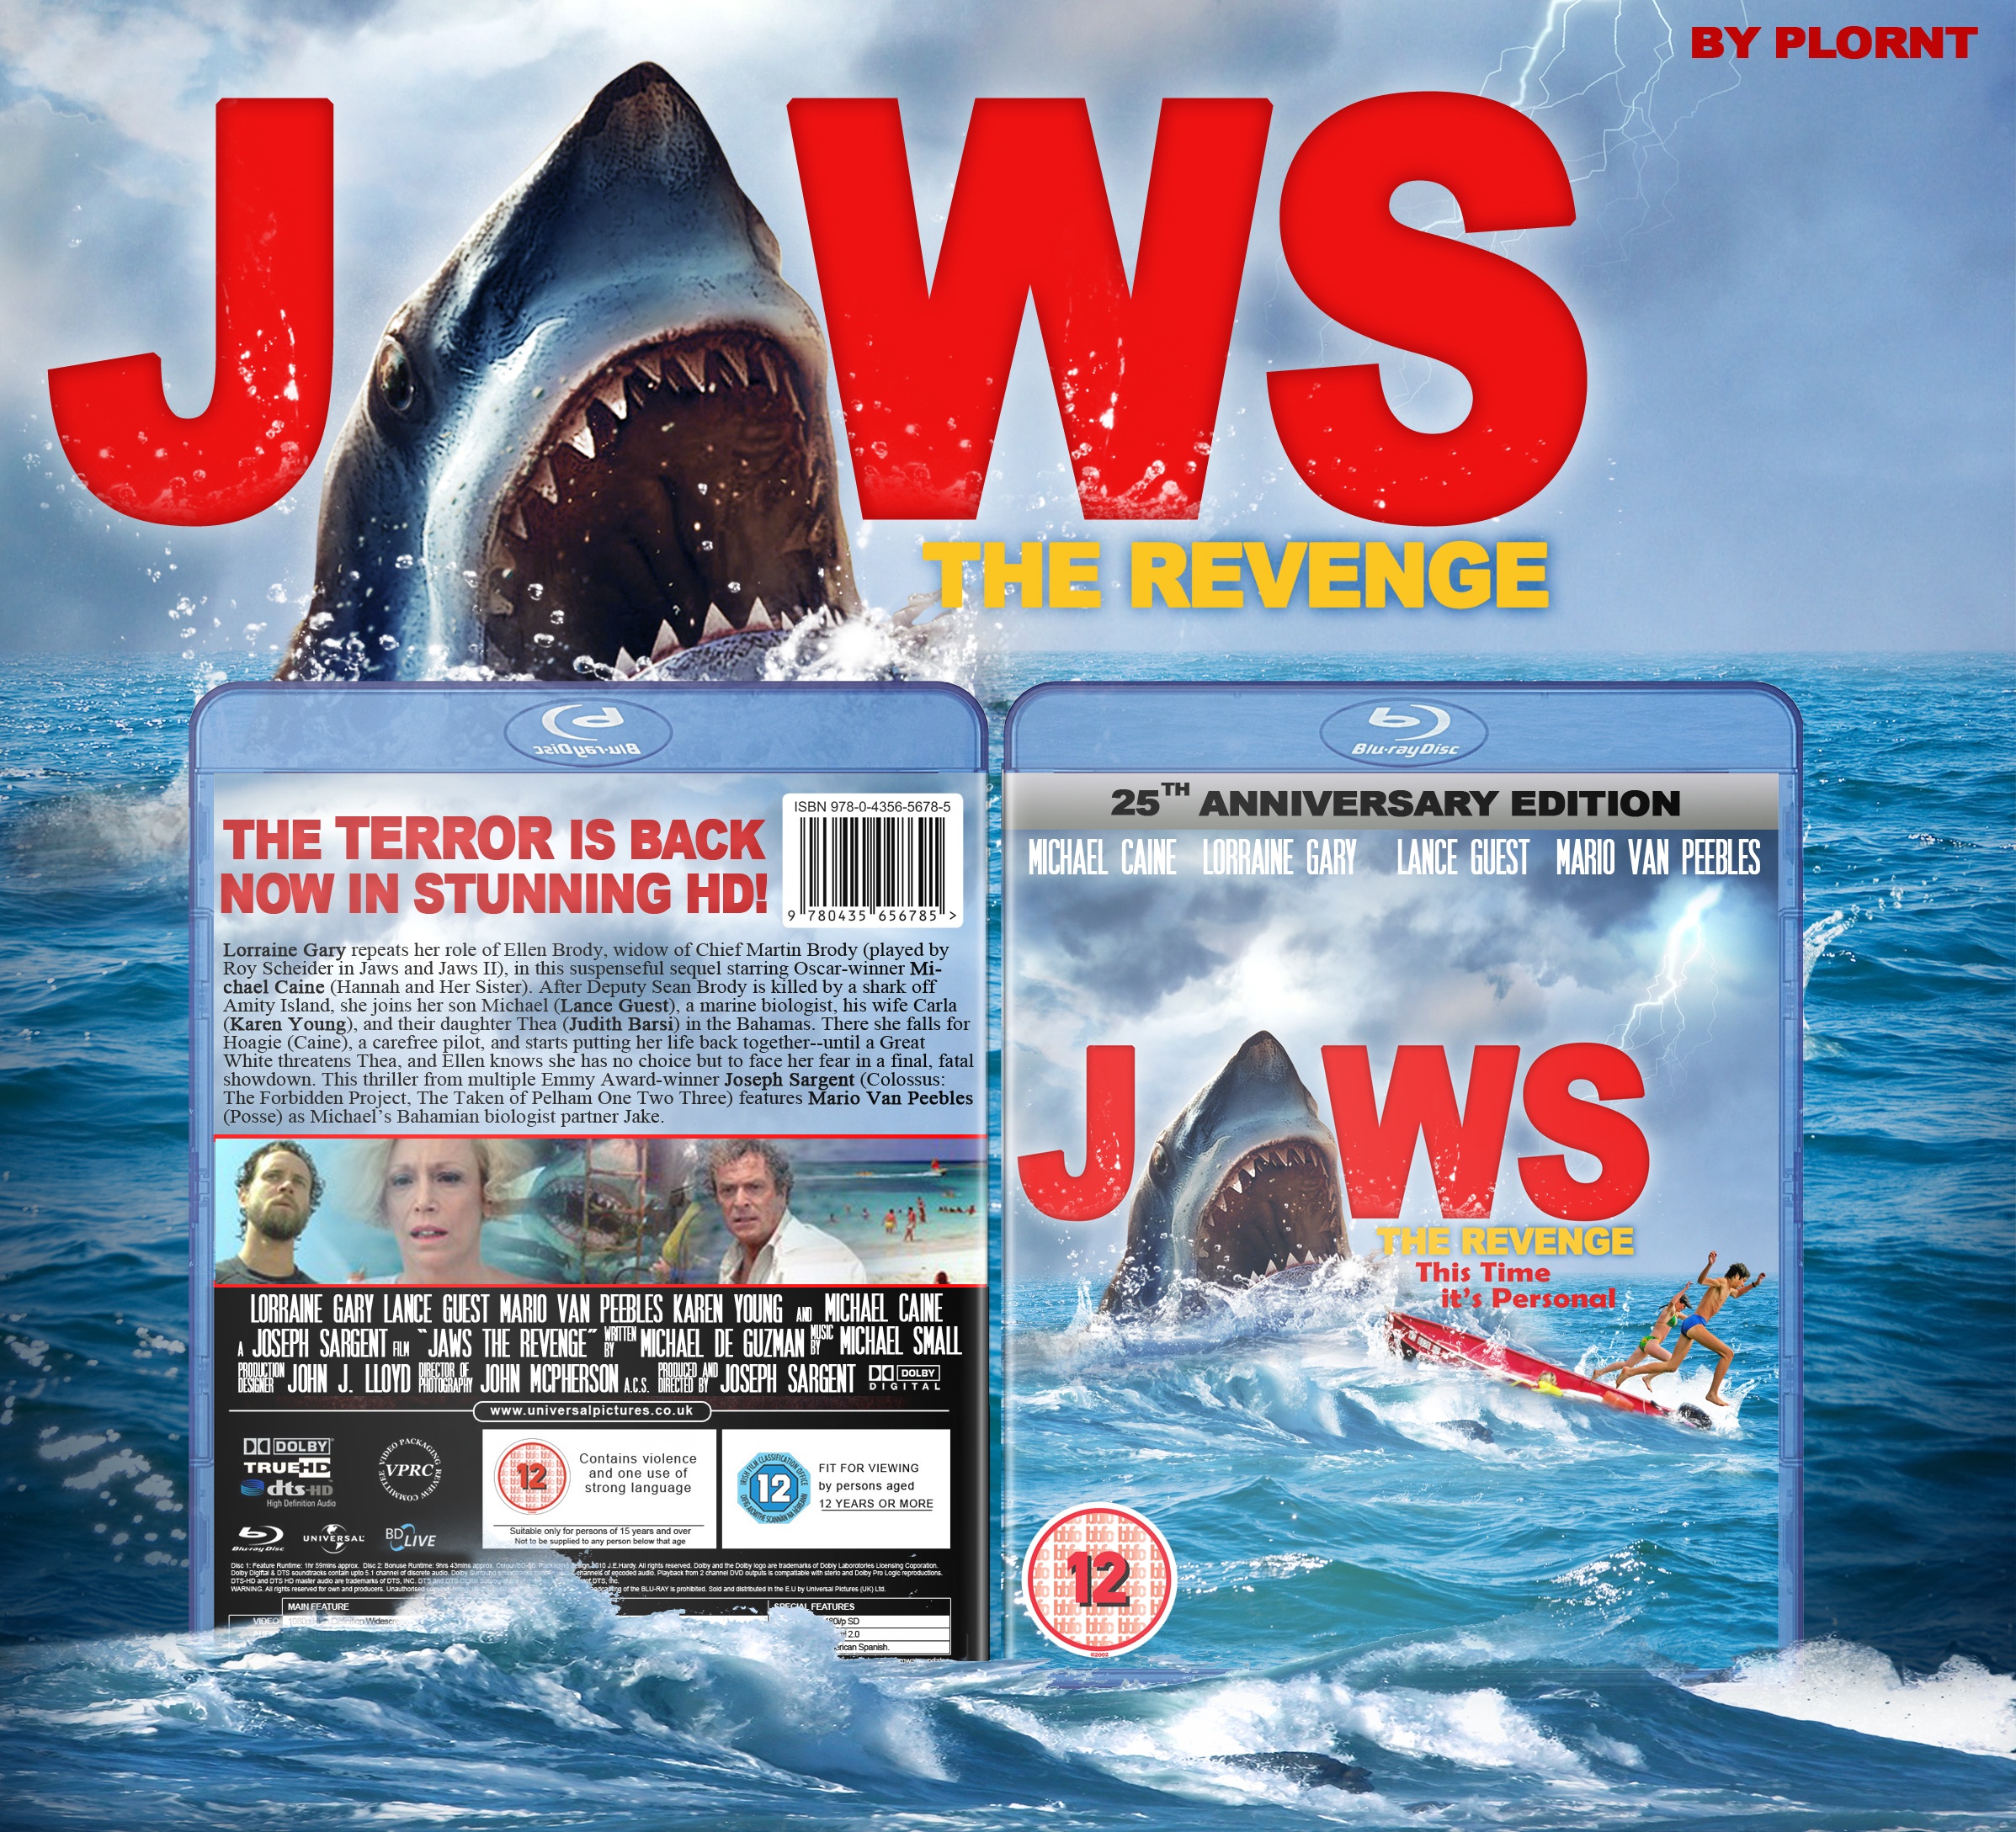 JAWS 4 The Revenge box cover